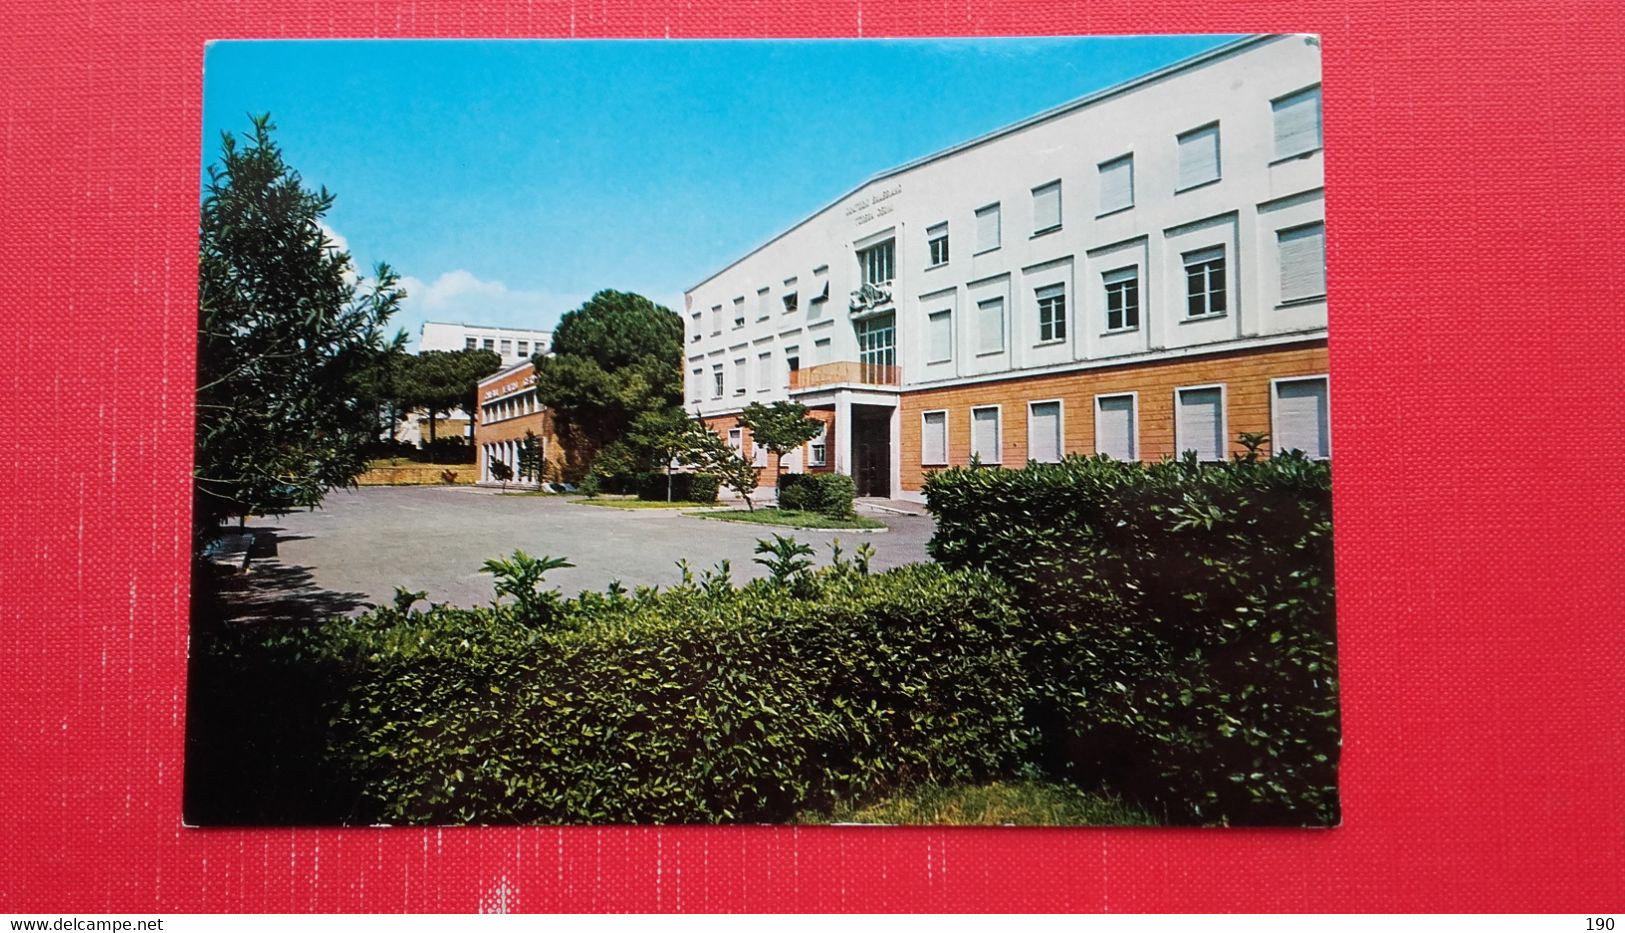 Roma.Instituto Salesiano.Teresa Gerni.2 Postcards - Education, Schools And Universities